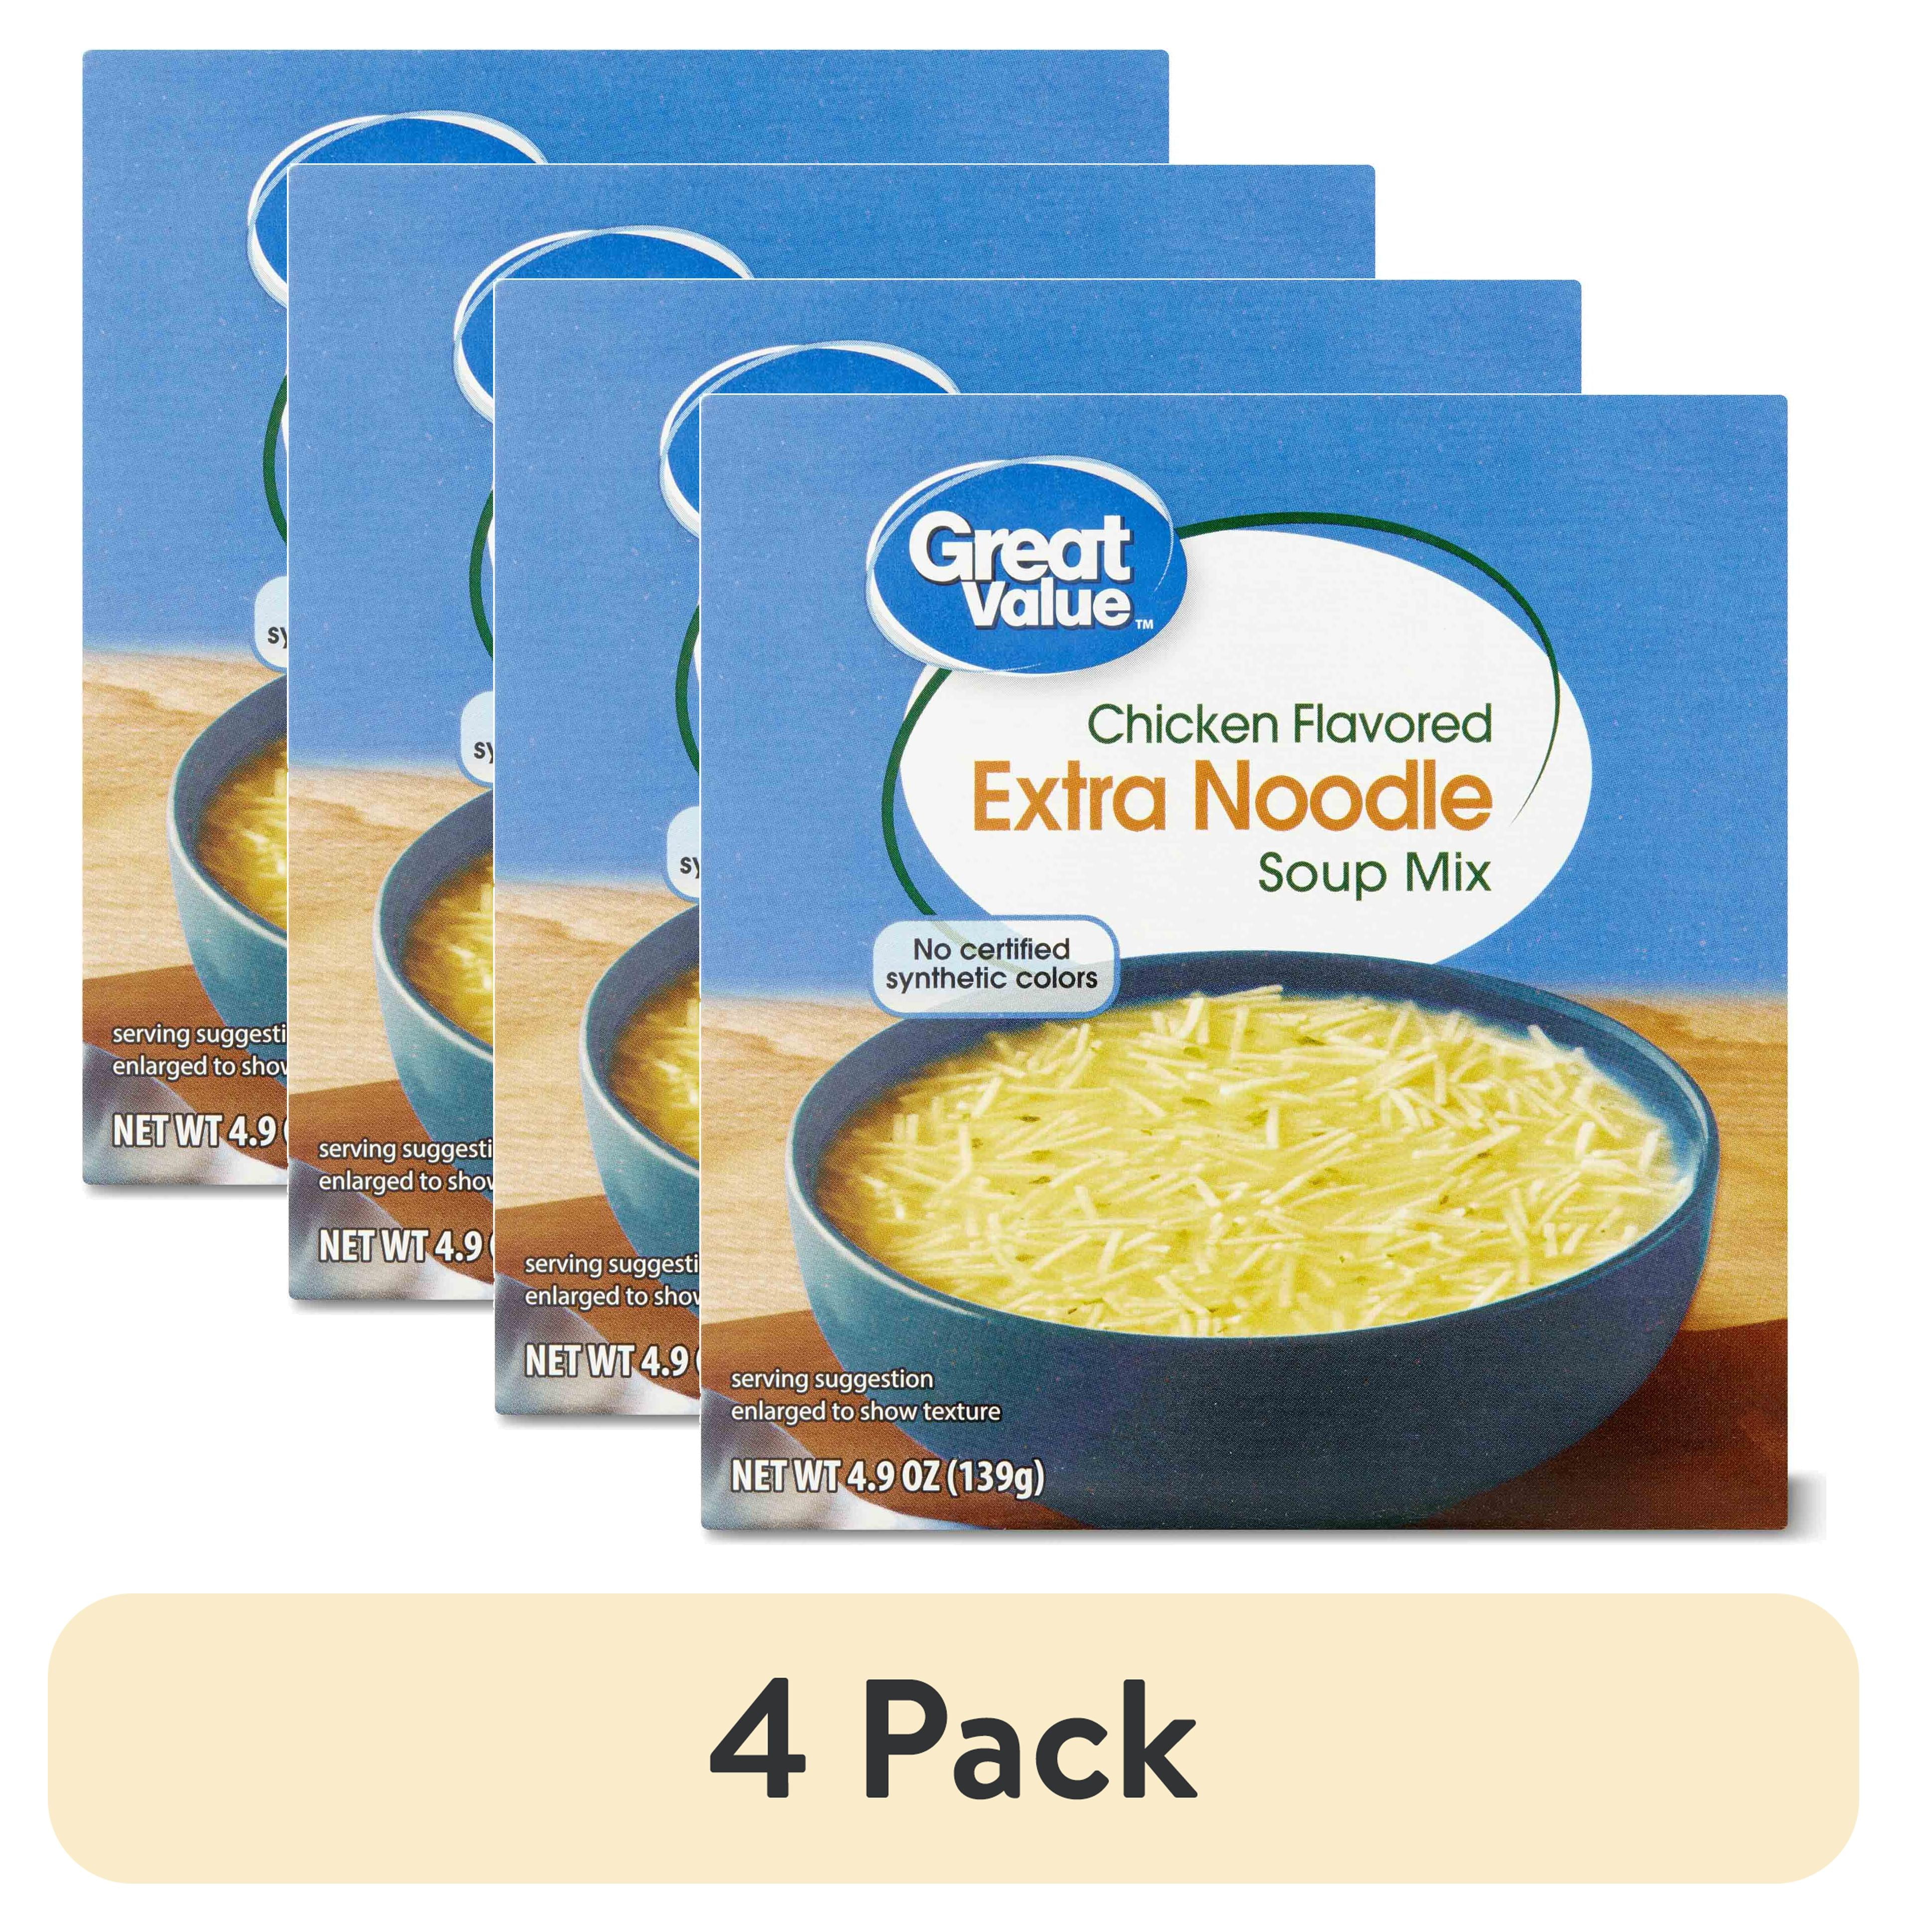 Chicken Noodle Soup Mix, 4.25 oz at Whole Foods Market